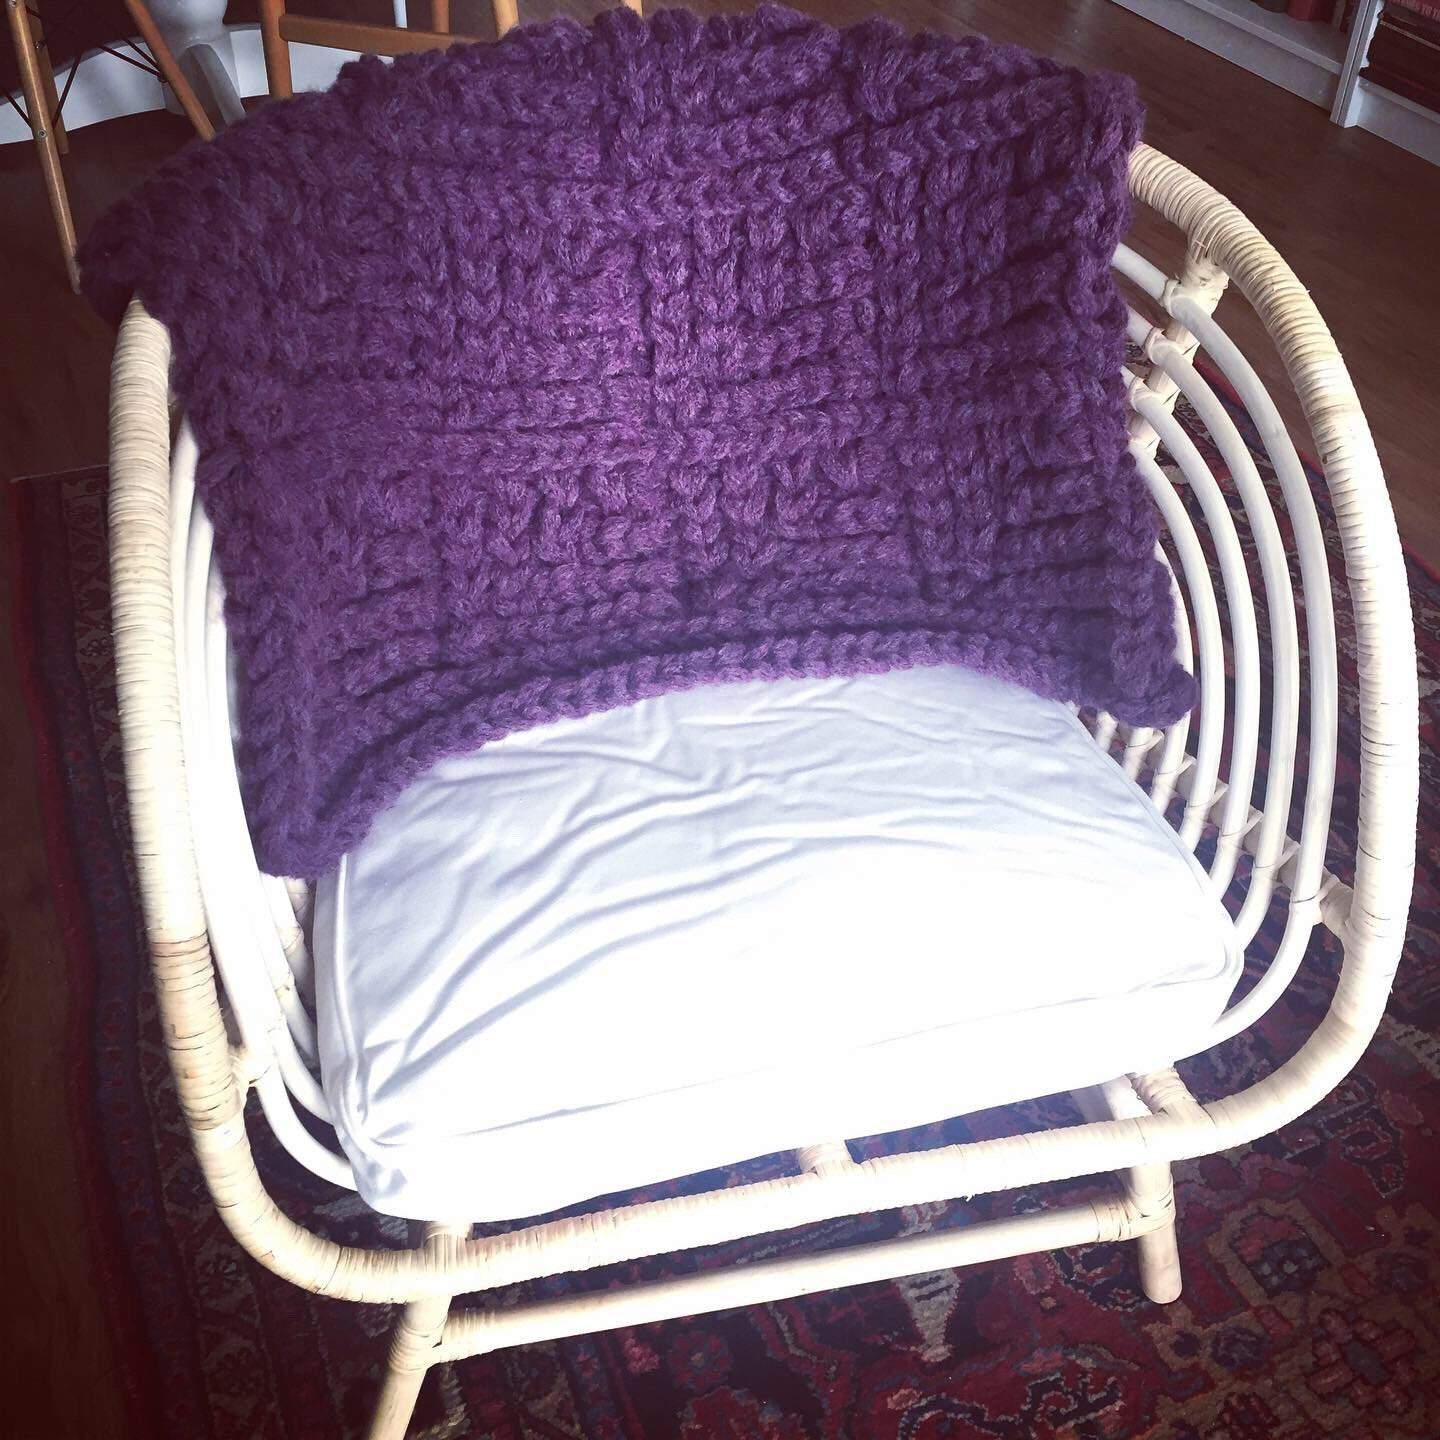 PATTERN: Brioche Knit Style Rug or Throw Blanket - ILoveMyBlanket